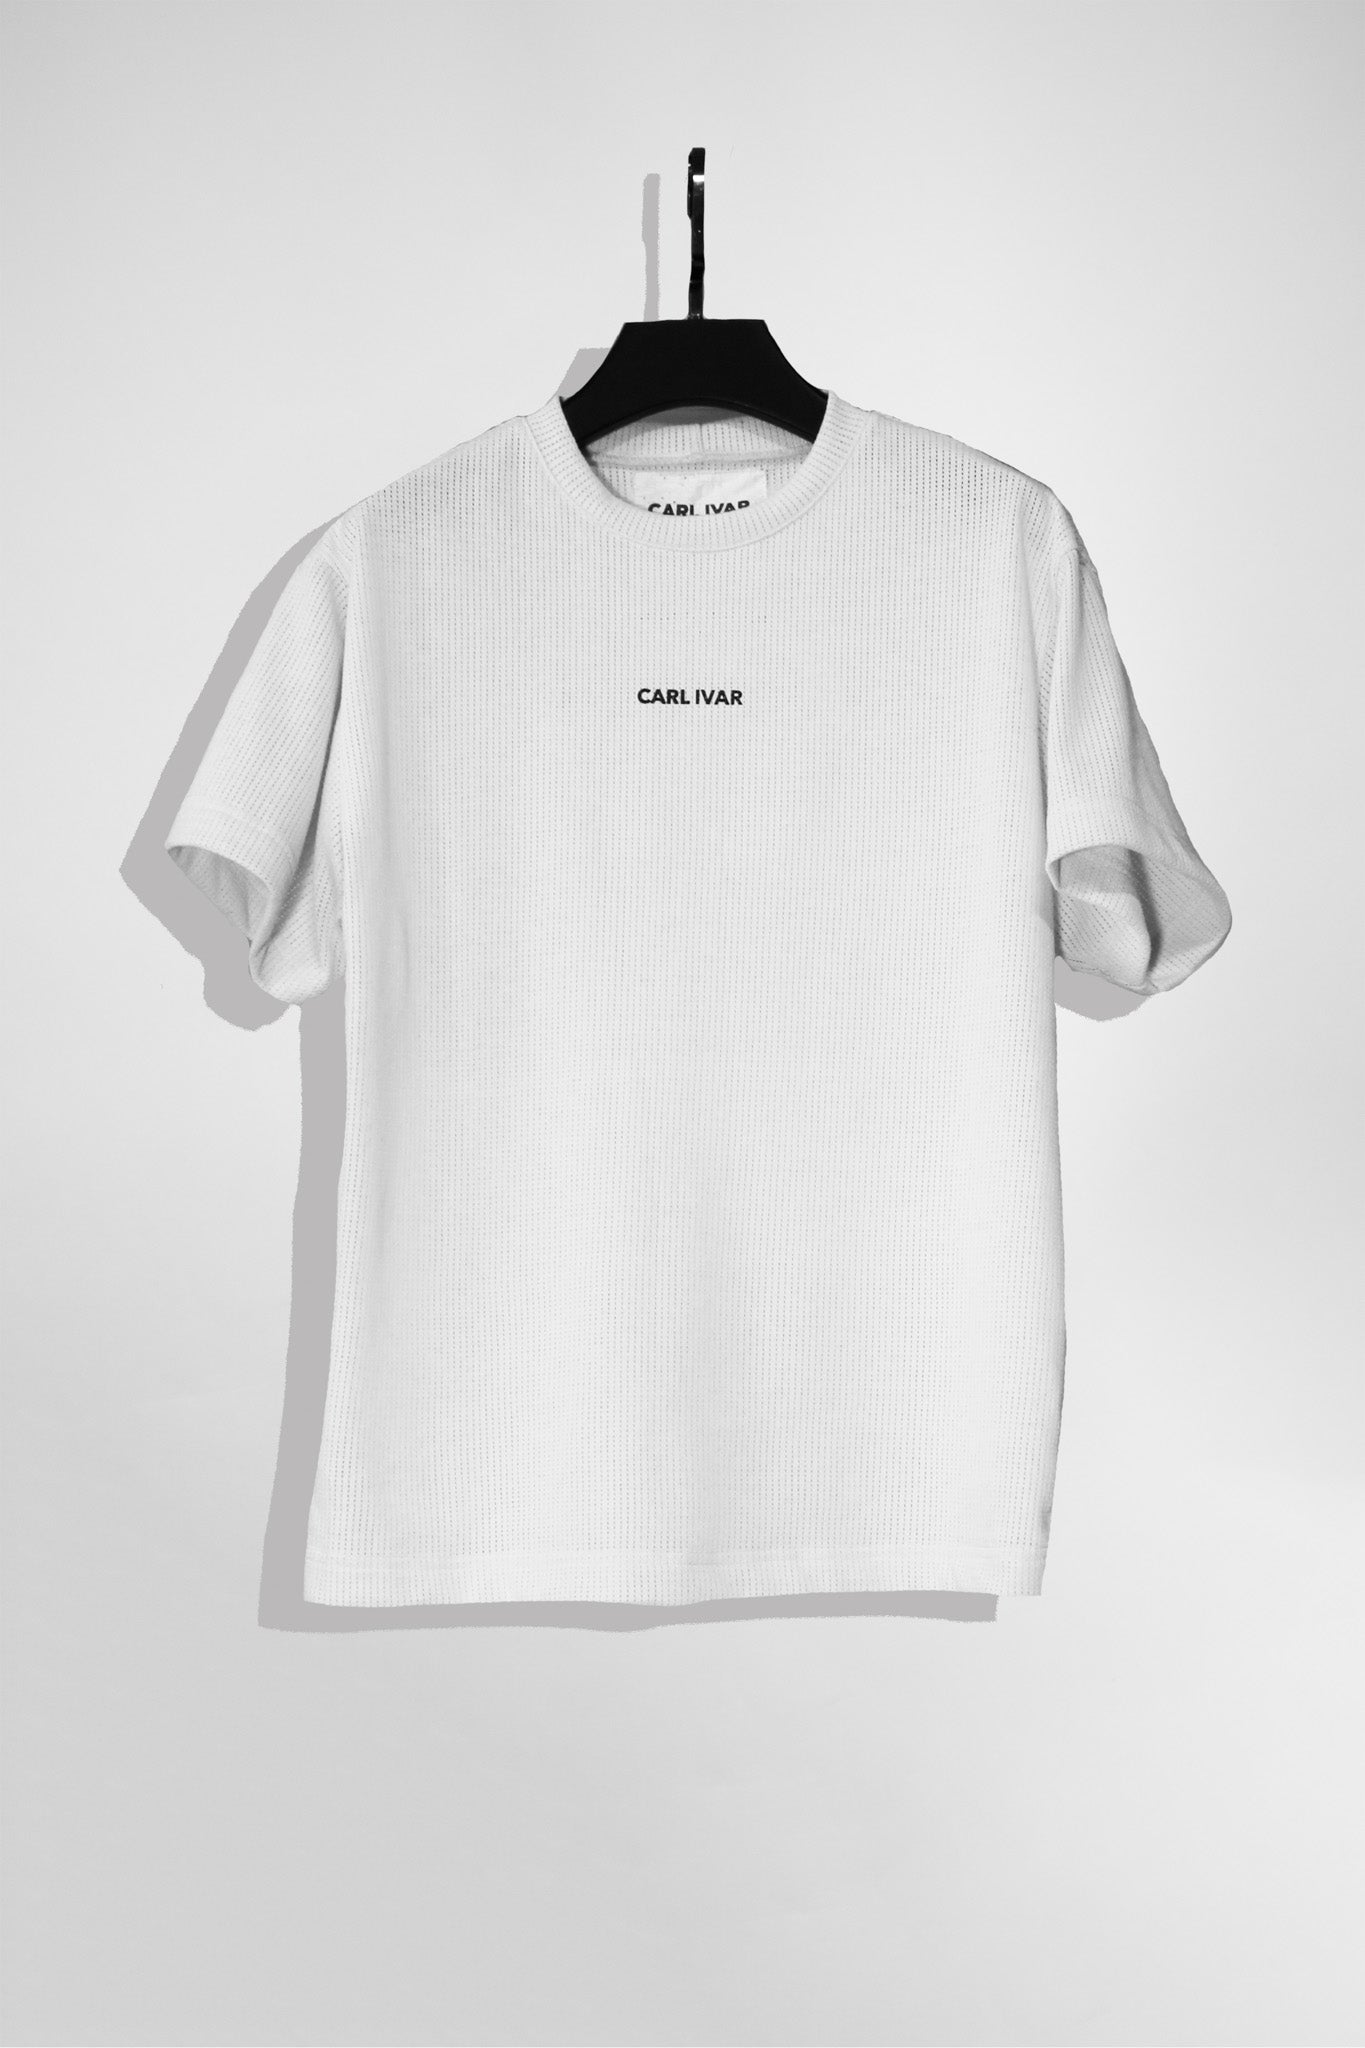 Perforated Print T-Shirt – CARL IVAR